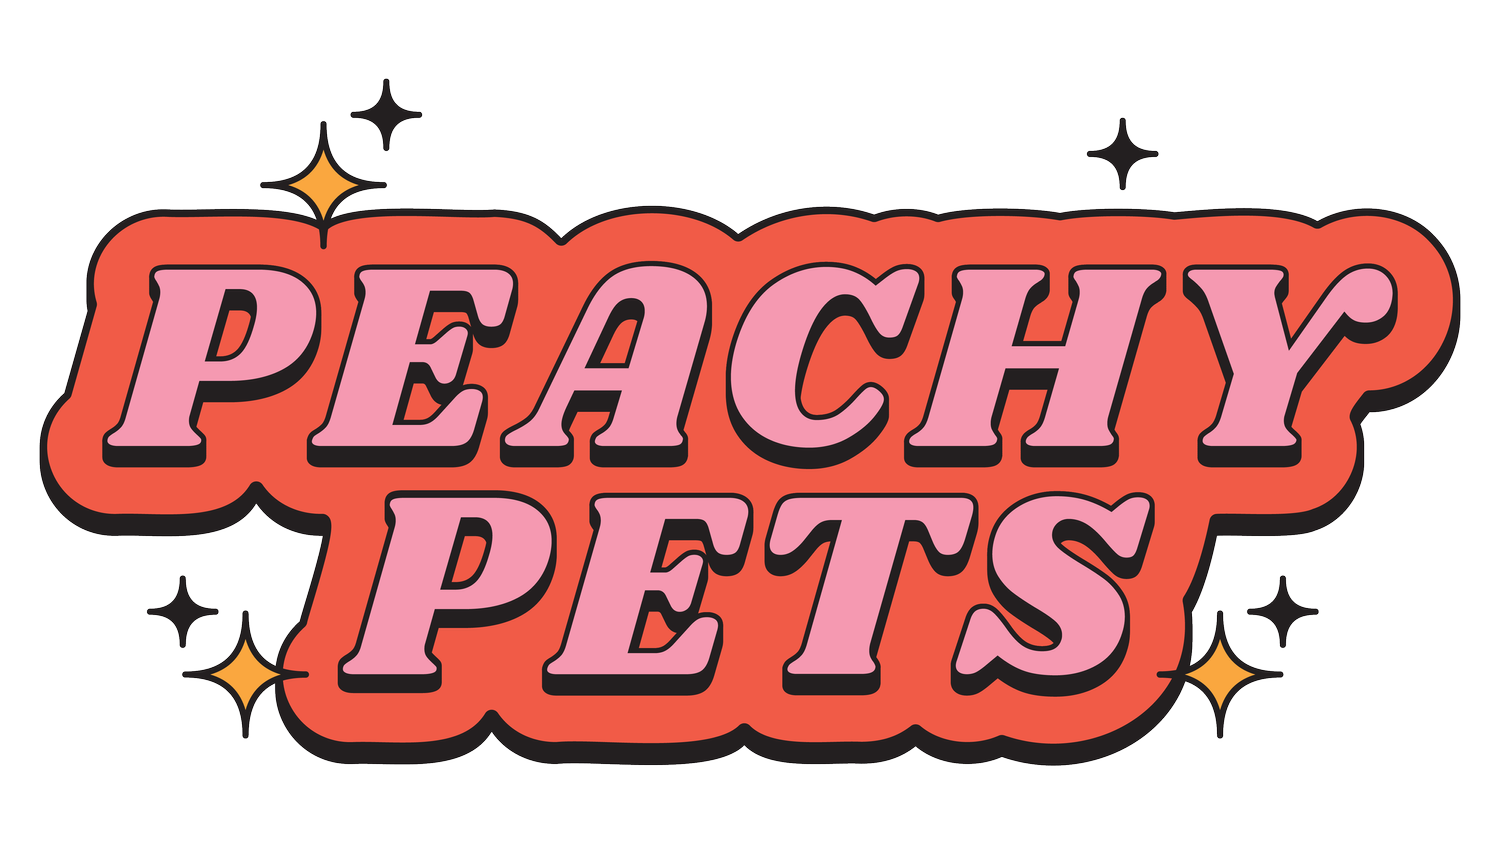 Peachy Pets